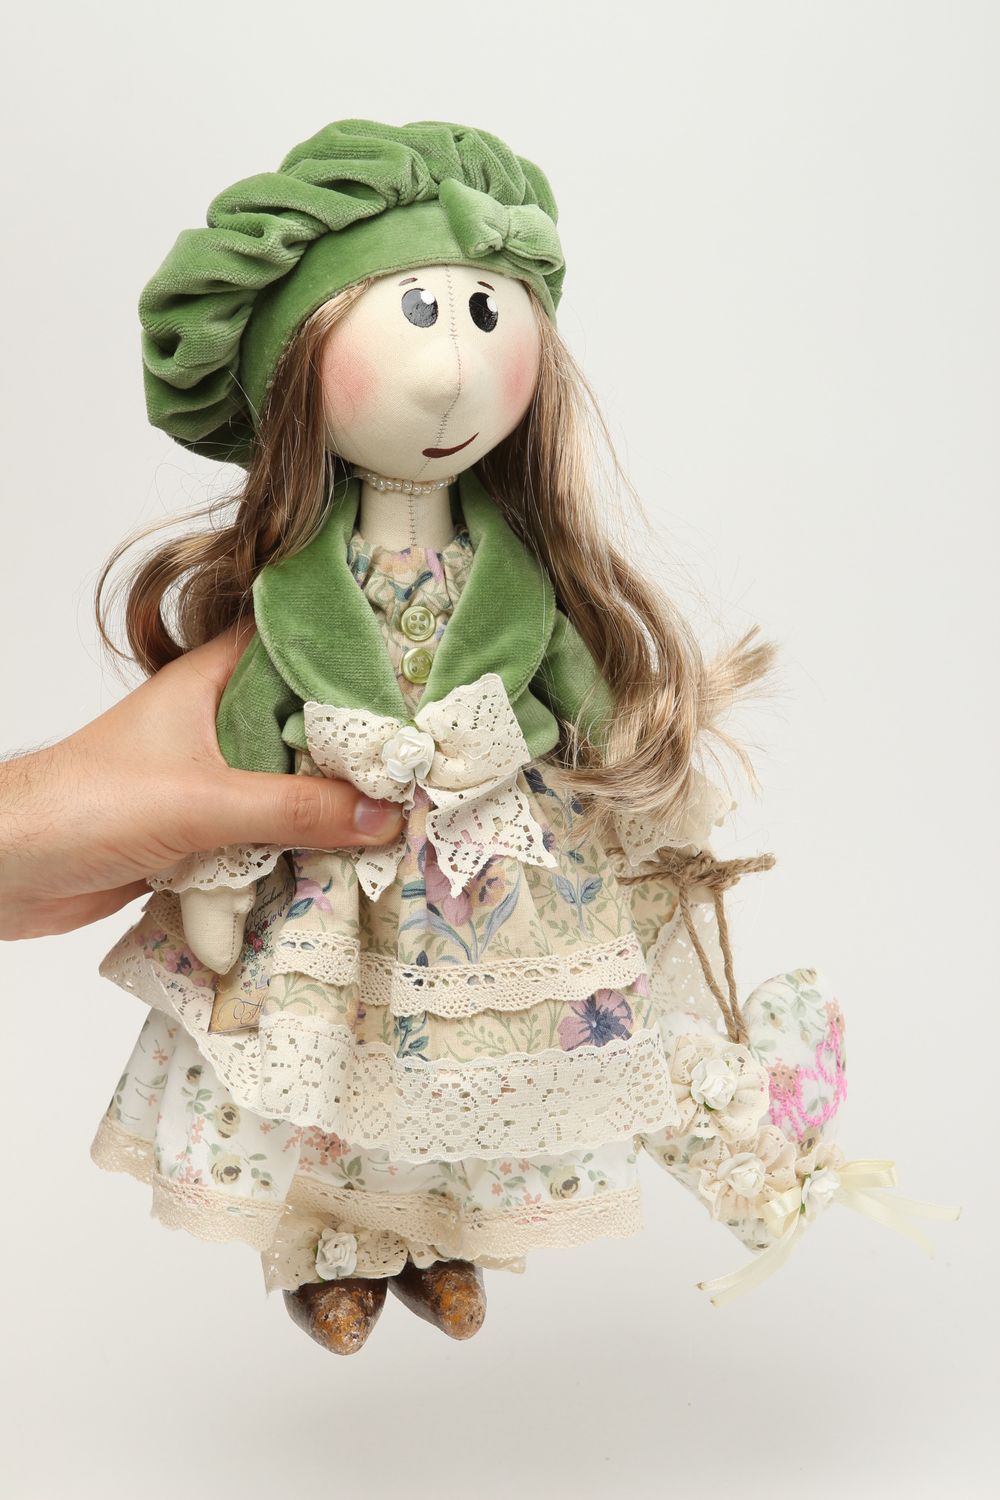 Handmade toy handmade rag doll interior dolls soft toys for children baby gift photo 5